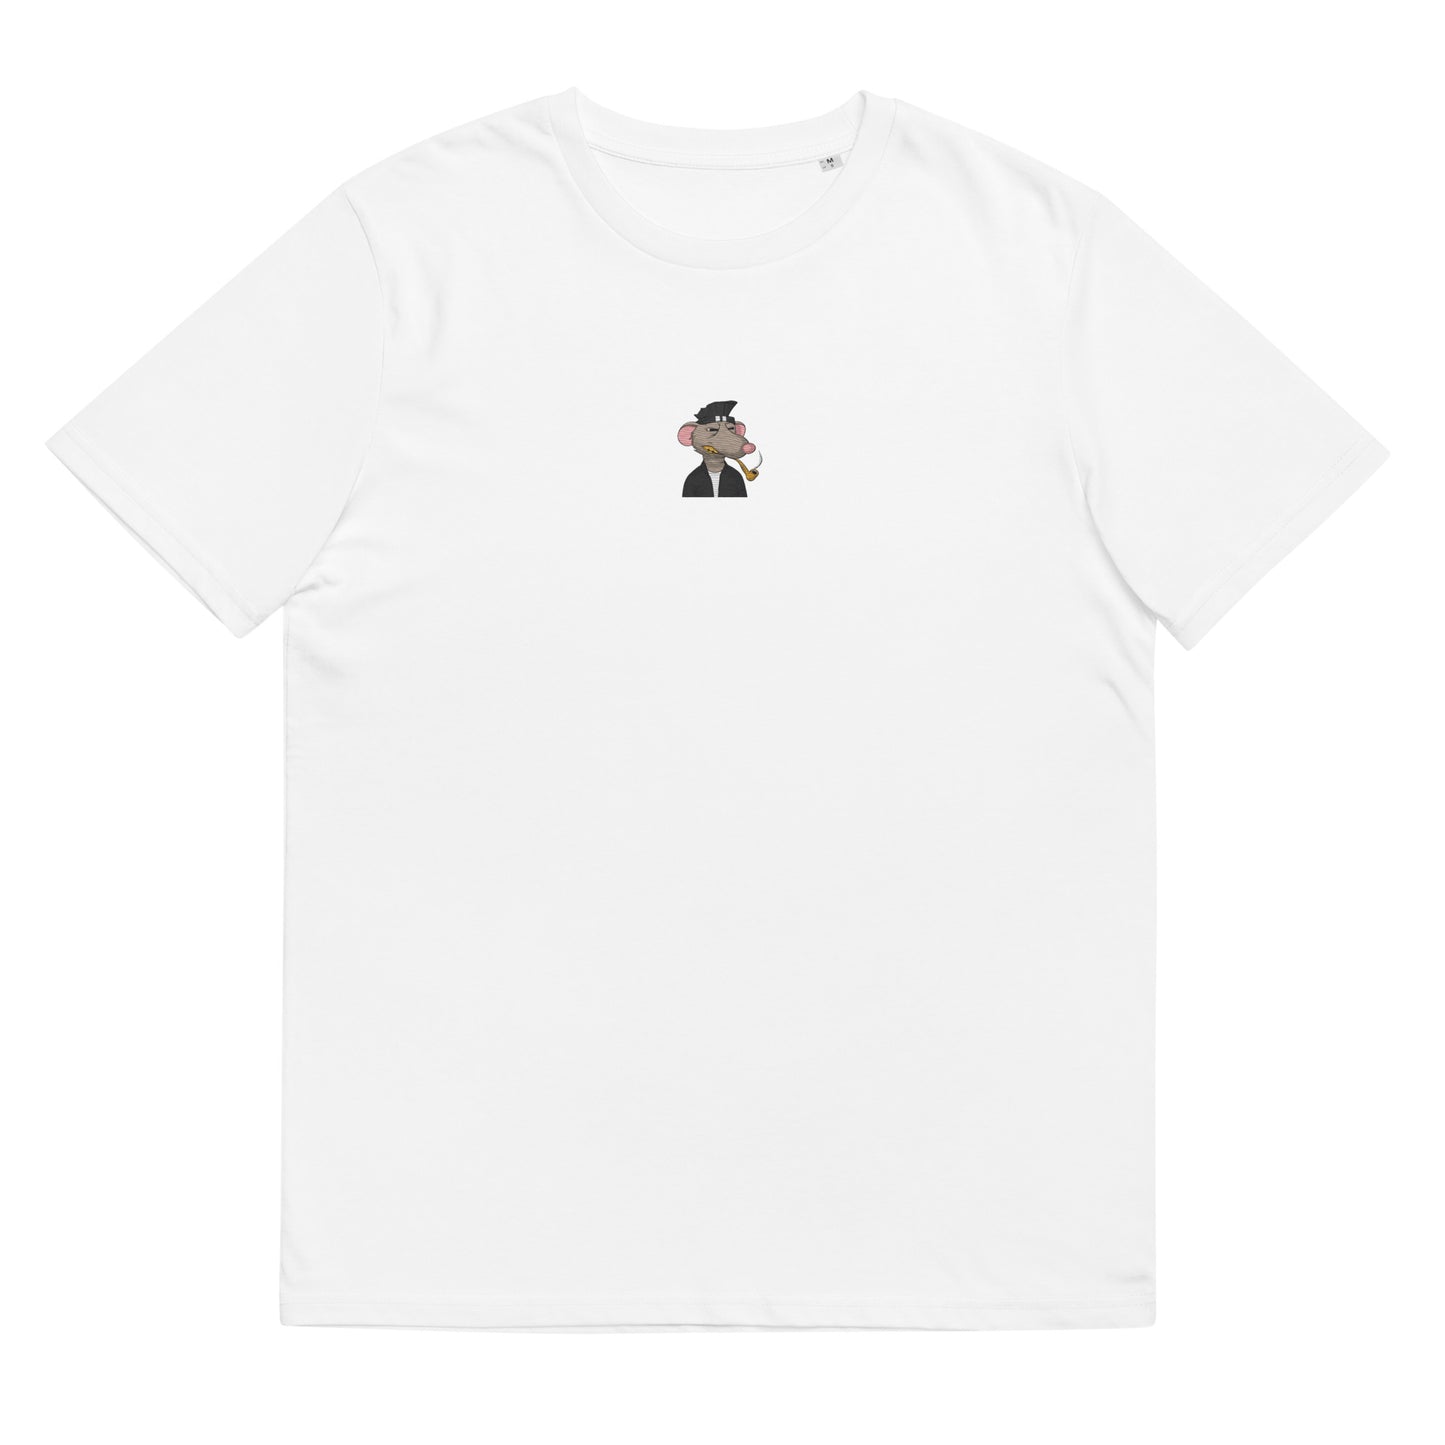 Unisex organic cotton t-shirt feat Fat Rat #3320